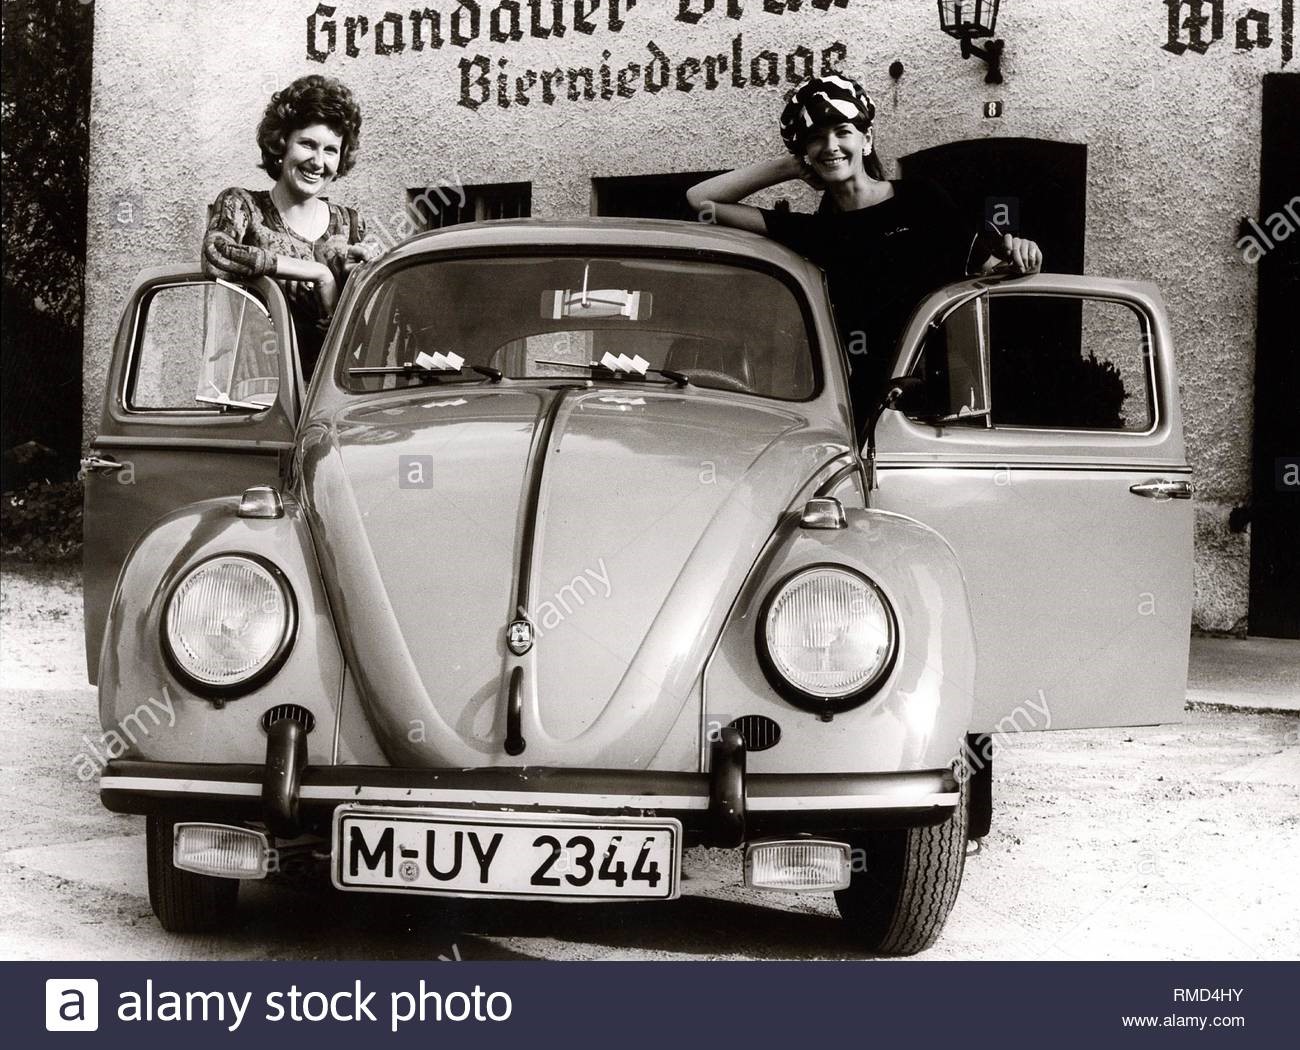 2 women standing near a Beetle built in 1960.